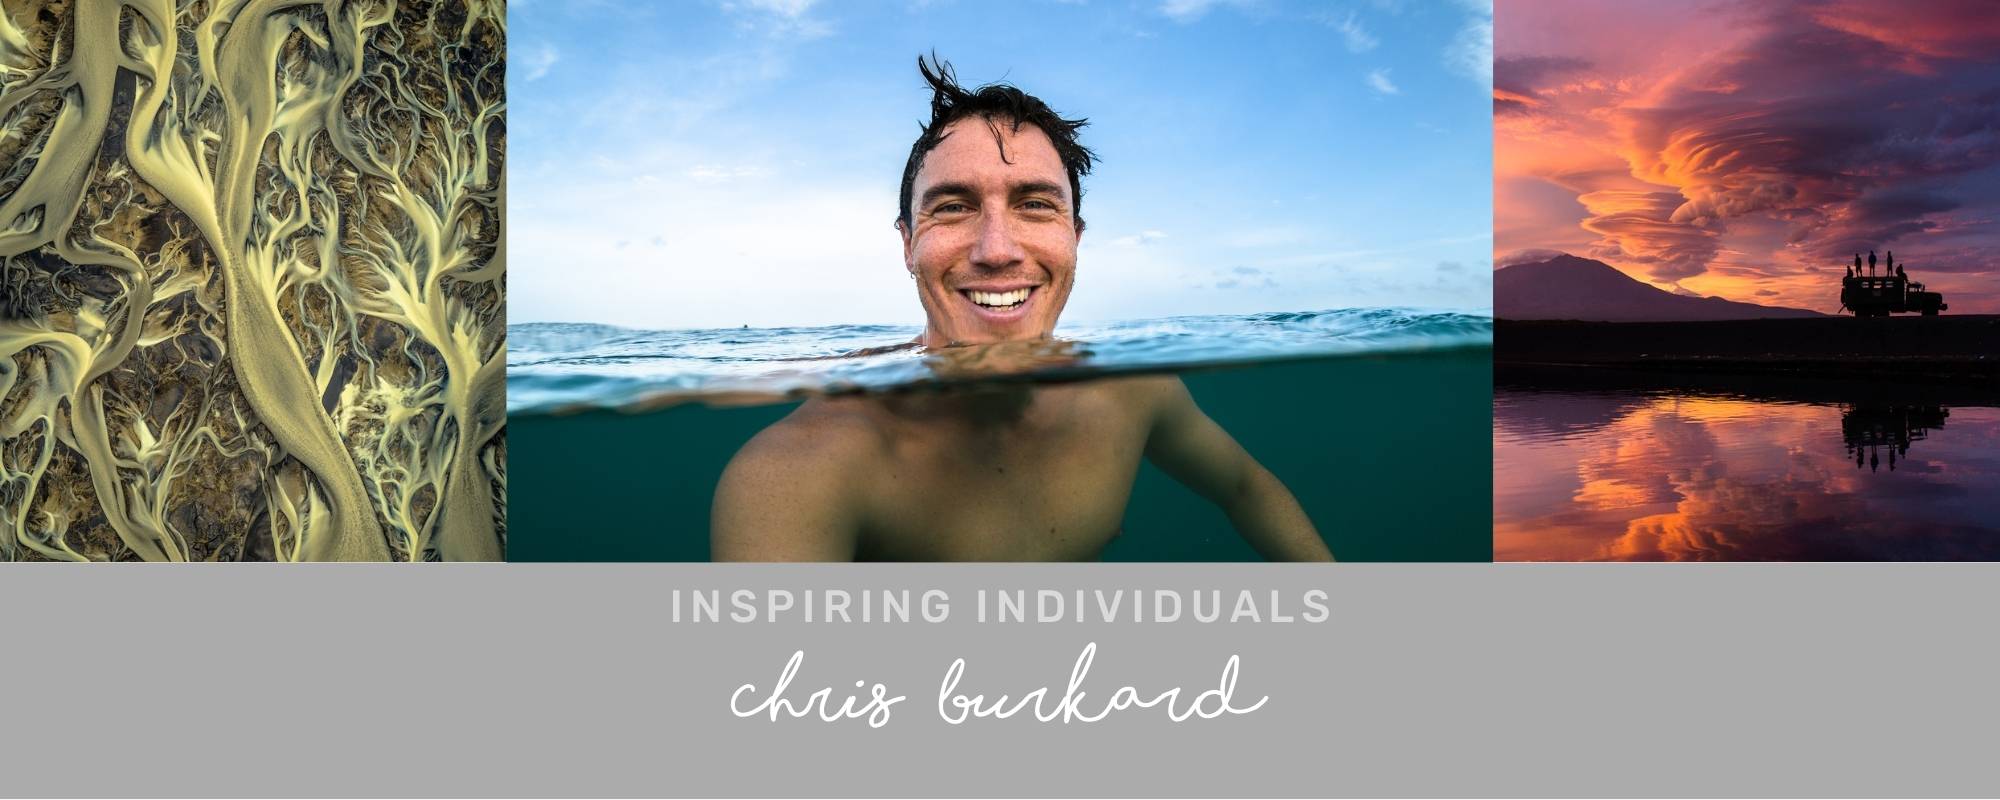 INSPIRING INDIVIDUAL: Chris Burkard